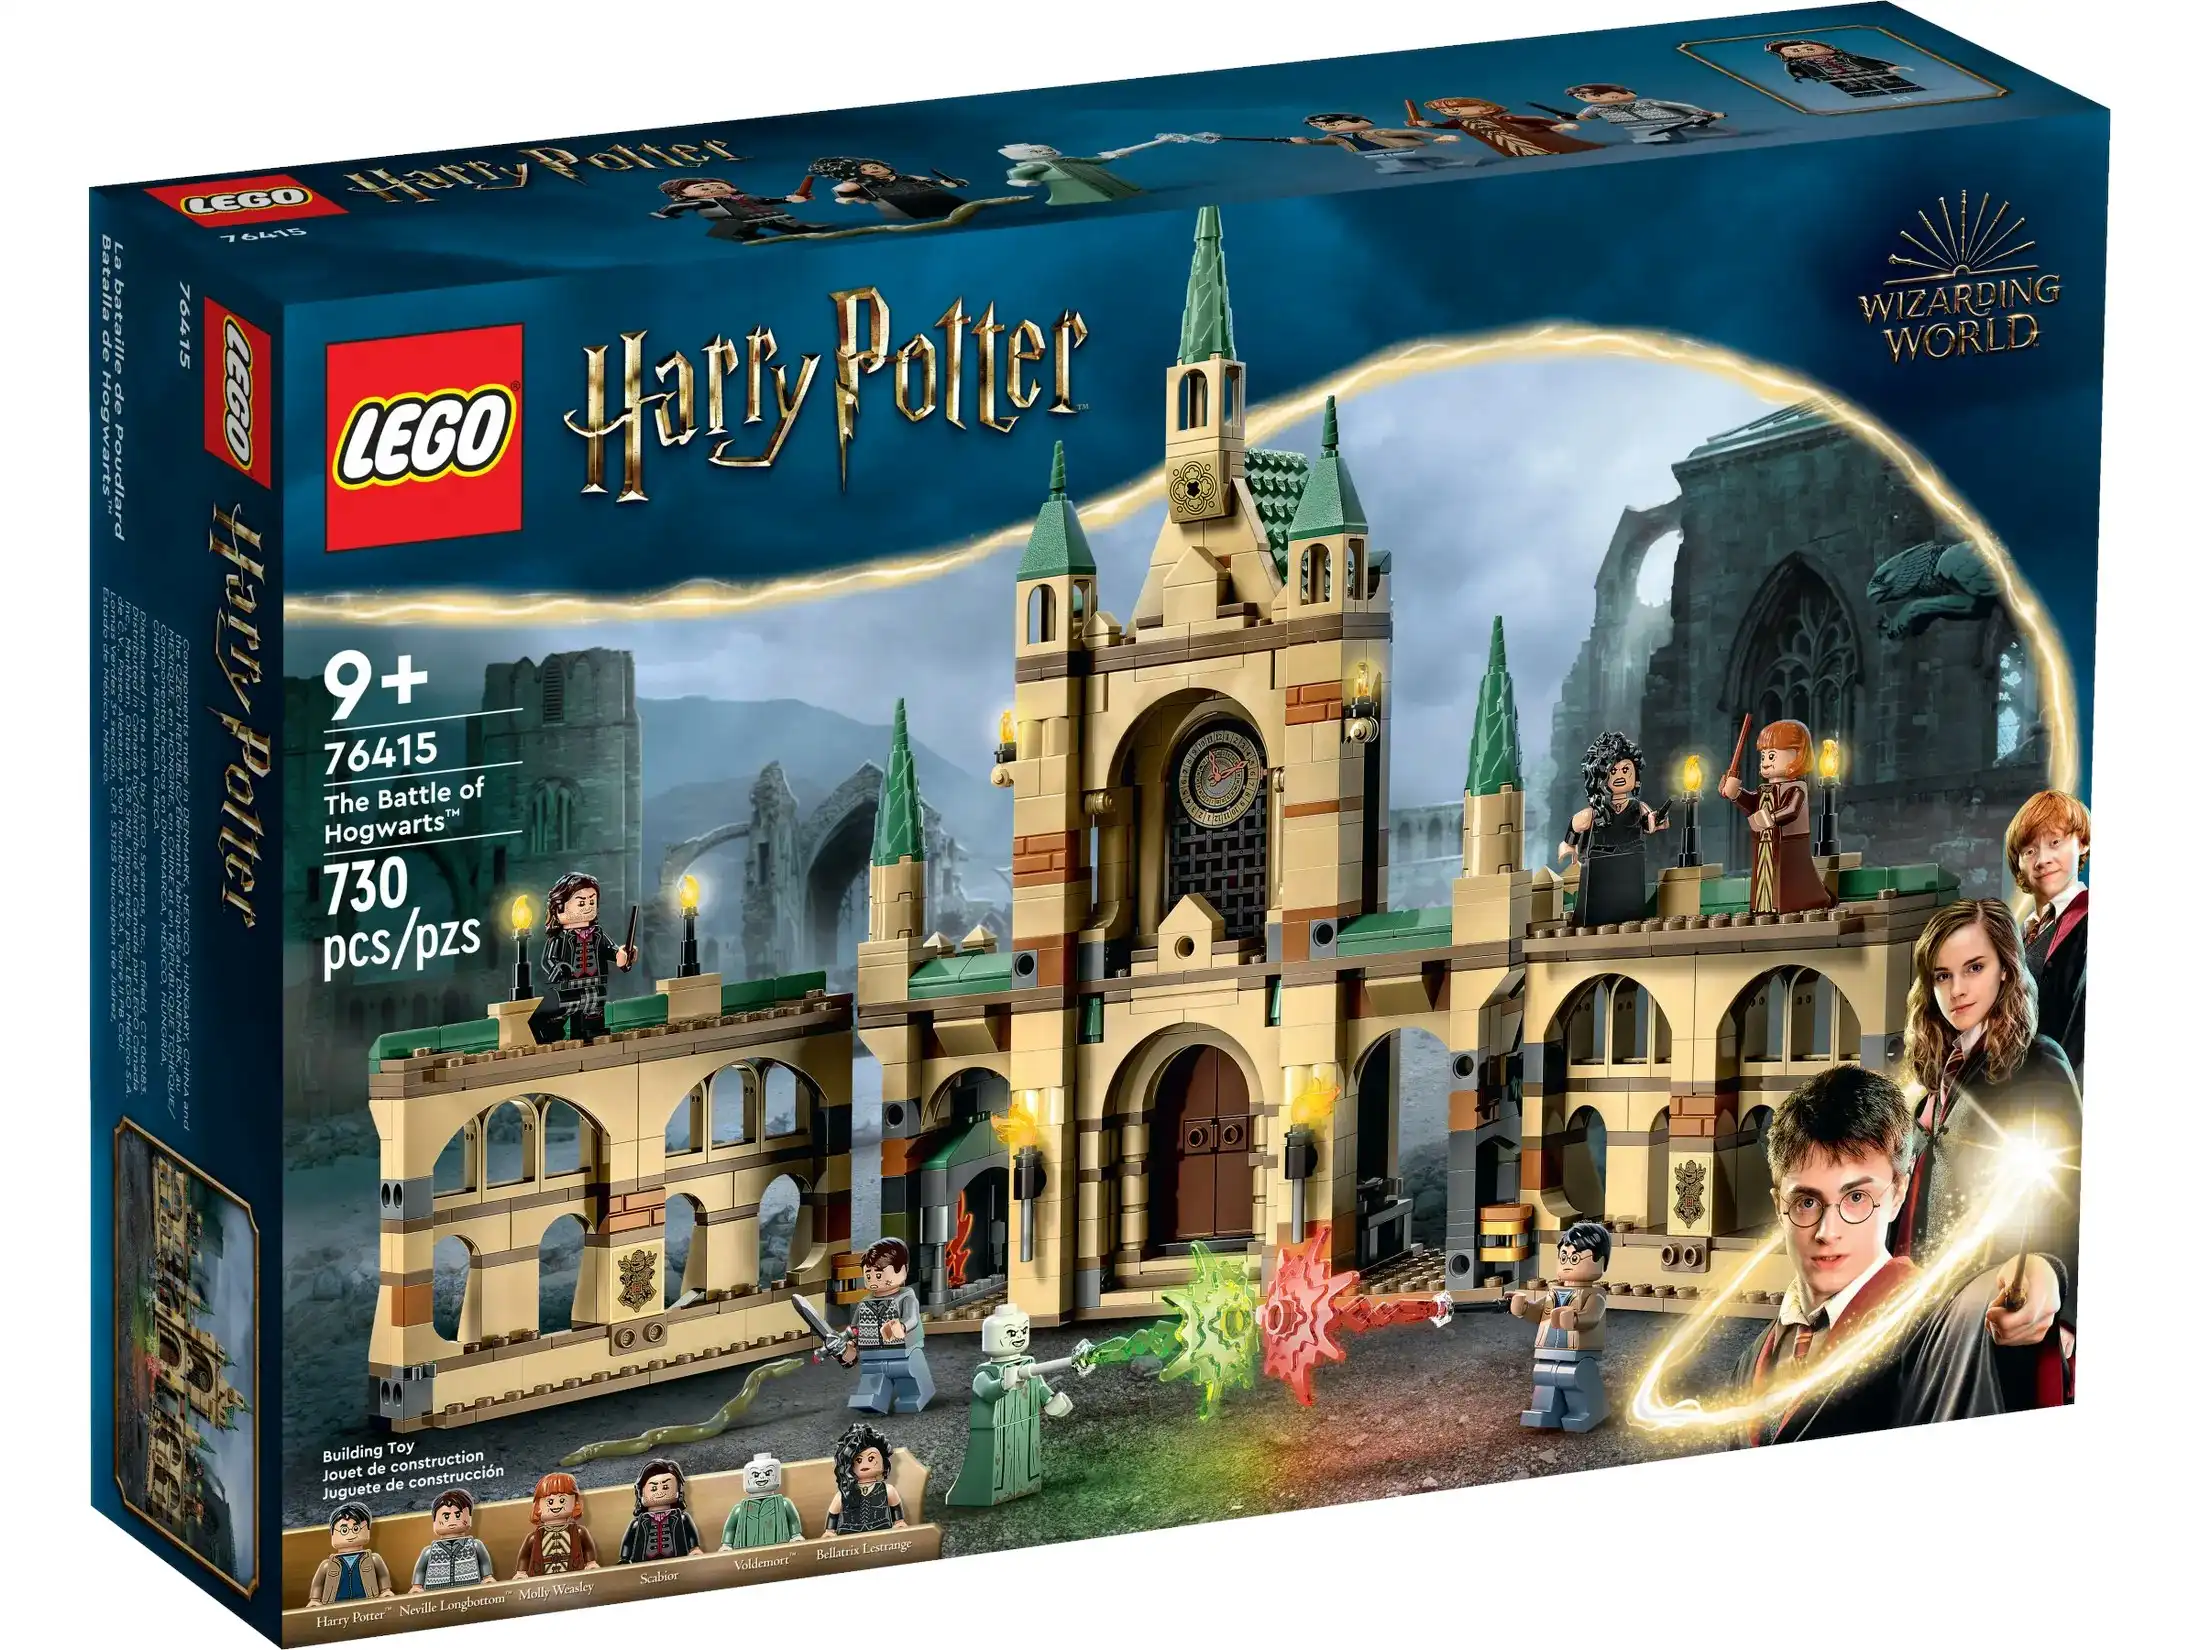 LEGO 76415 The Battle Of Hogwarts - Harry Potter